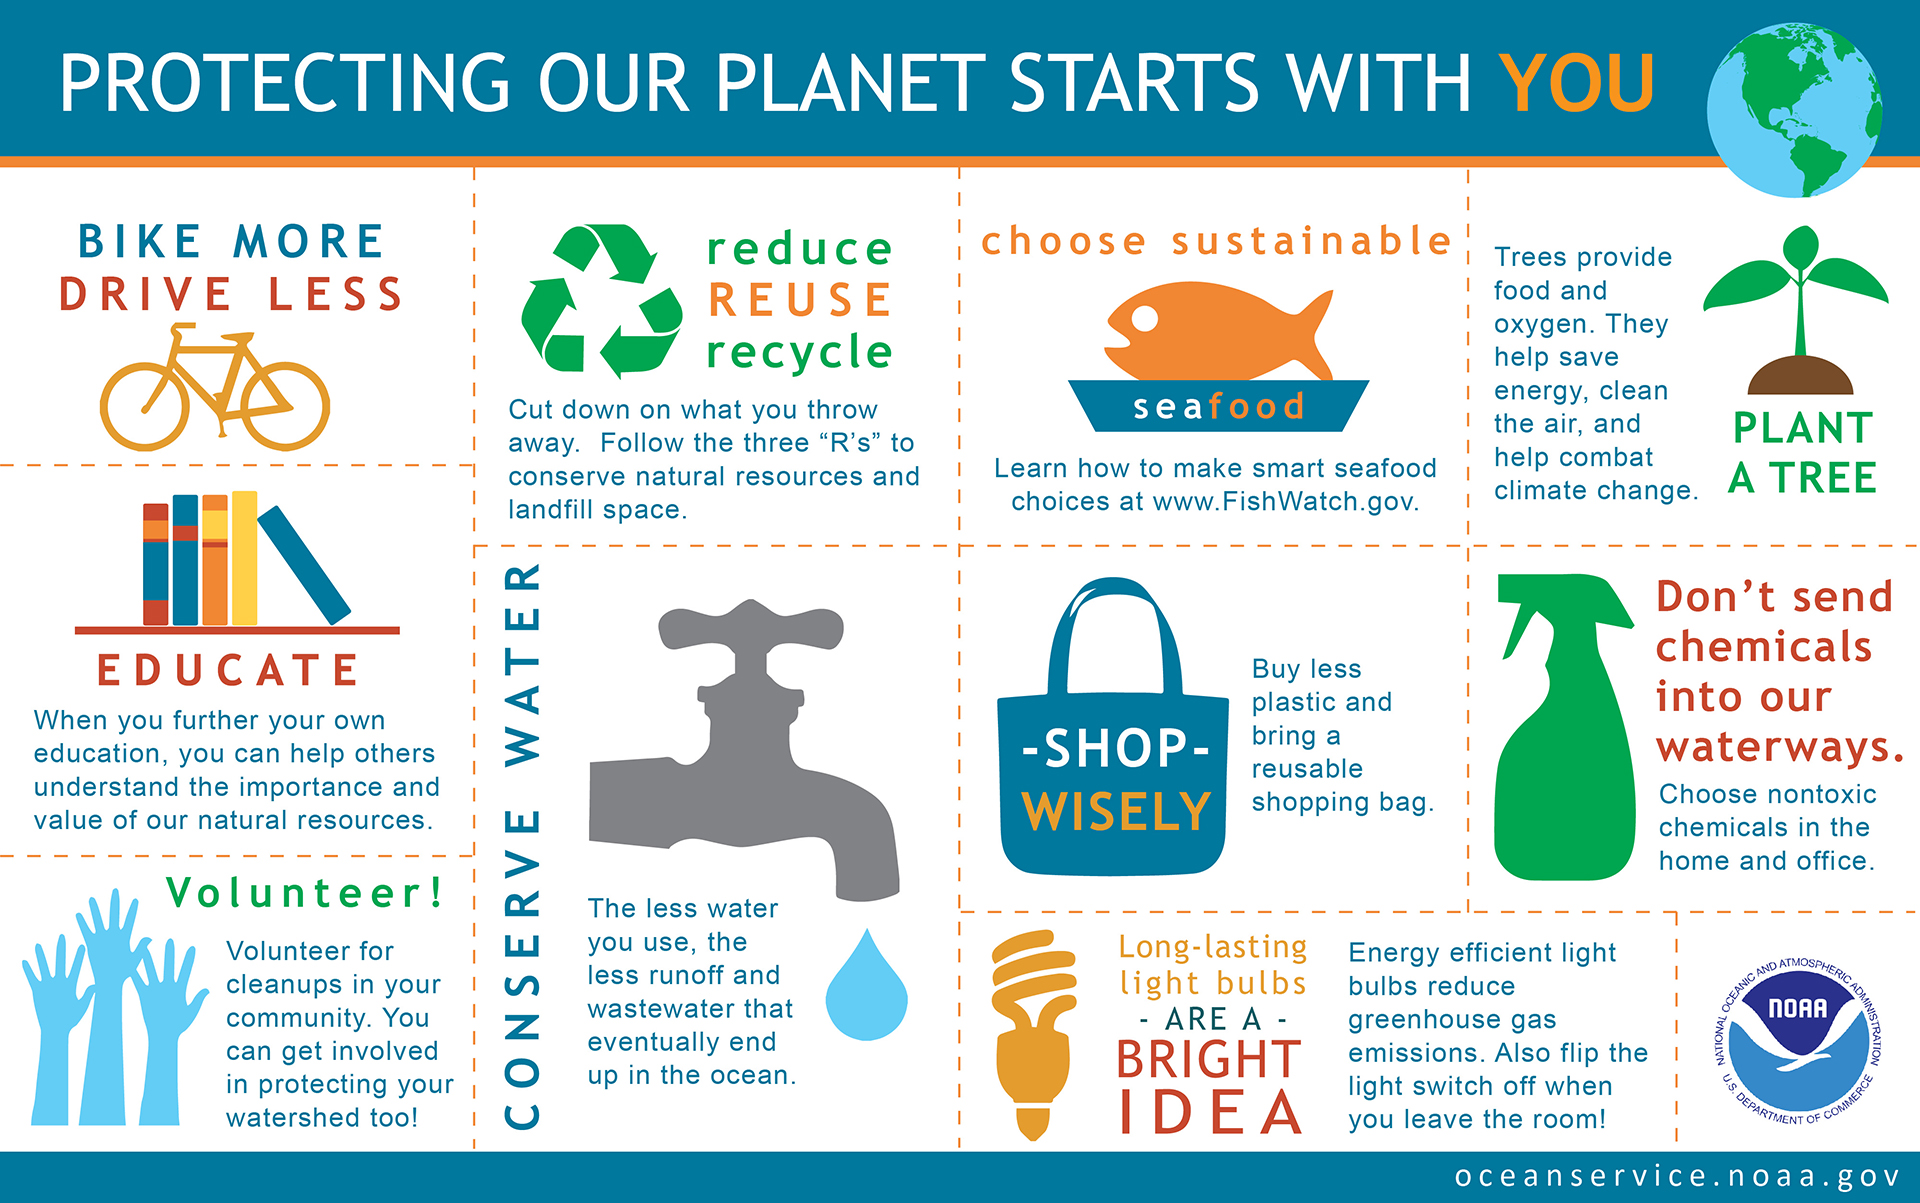 How do we make our environment?